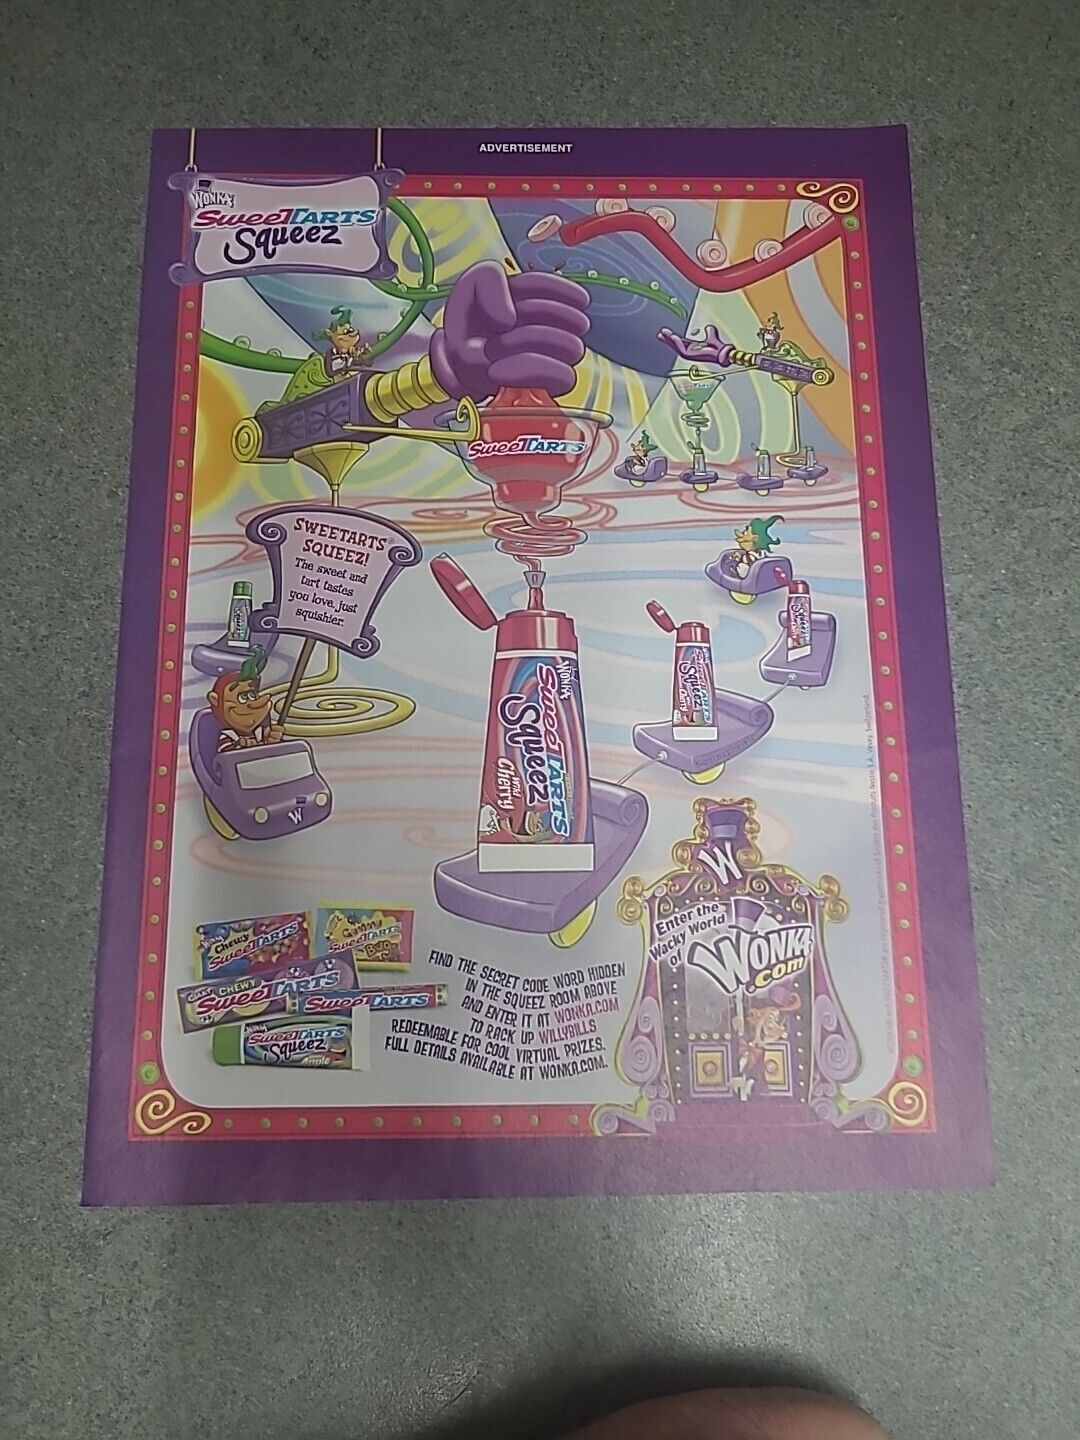 Wonka Sweetarts Squeez Candy Print Ad 2007  8x11 